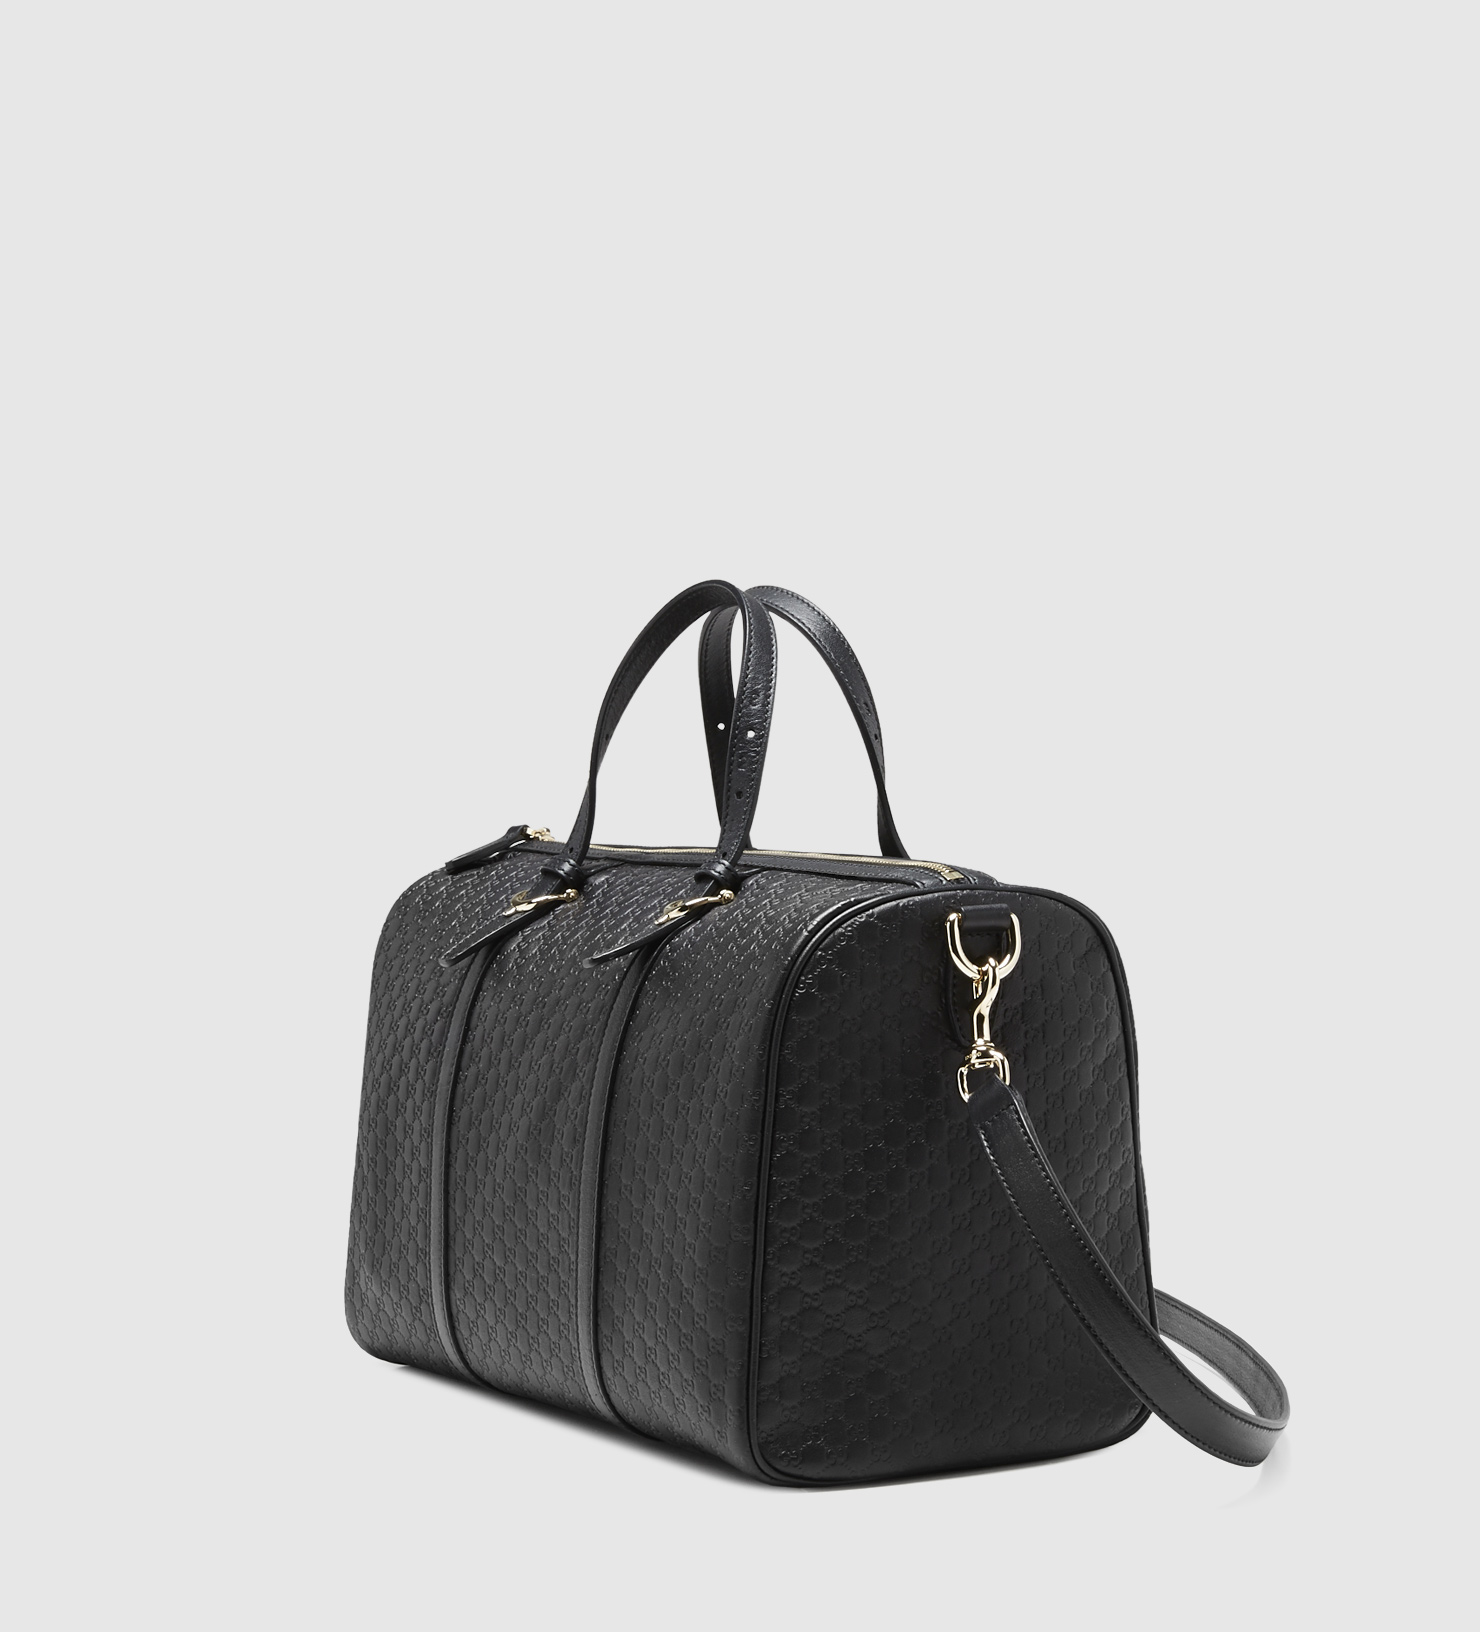 Gucci Nice Microguccissima-Leather Boston Bag in Black - Lyst